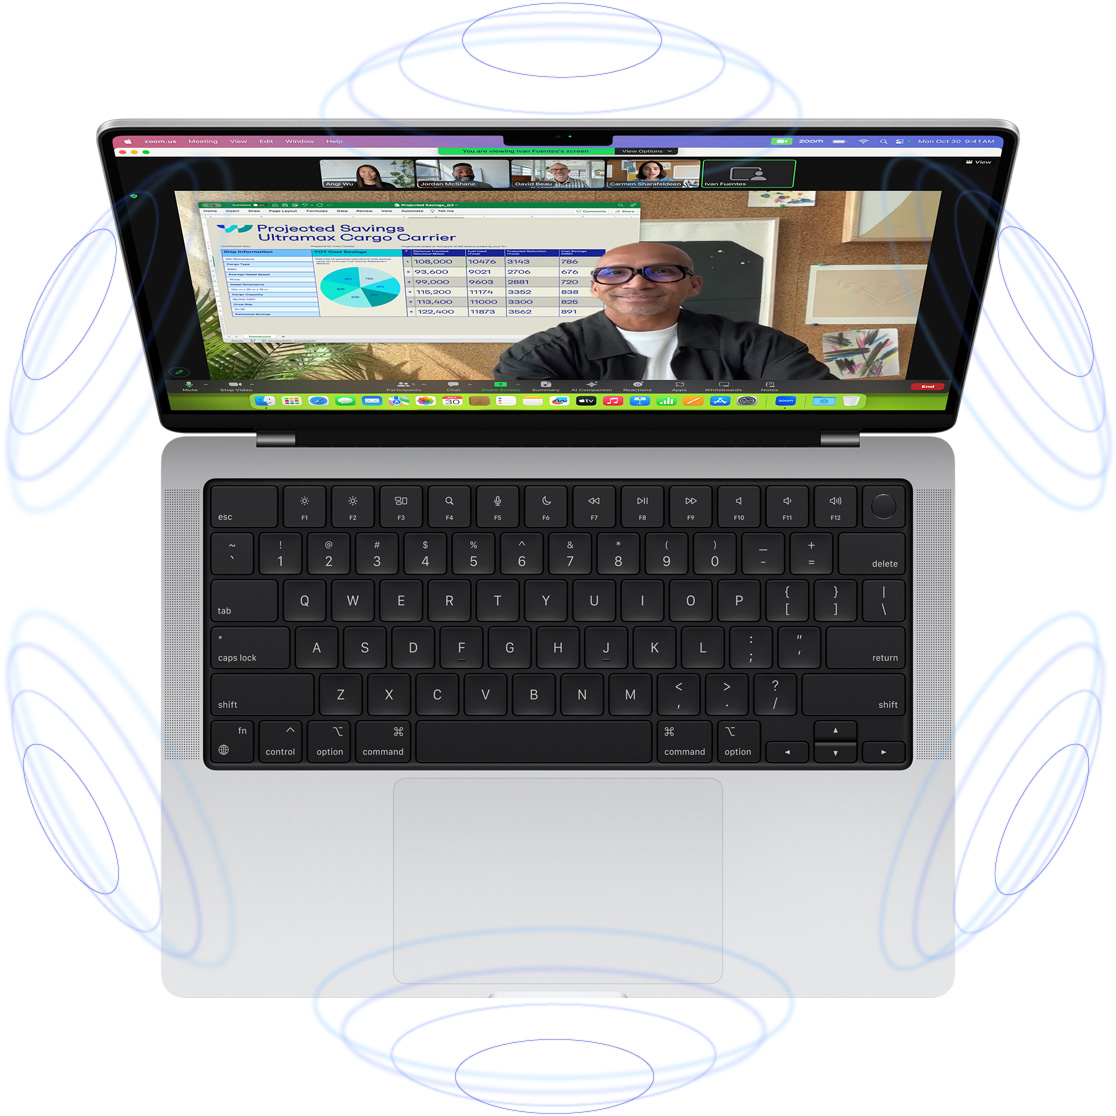 MacBook Pro 上進行的 FaceTime 視像通話，環繞的藍色圓圈圖形呈現出空間音訊帶來 3D 效果